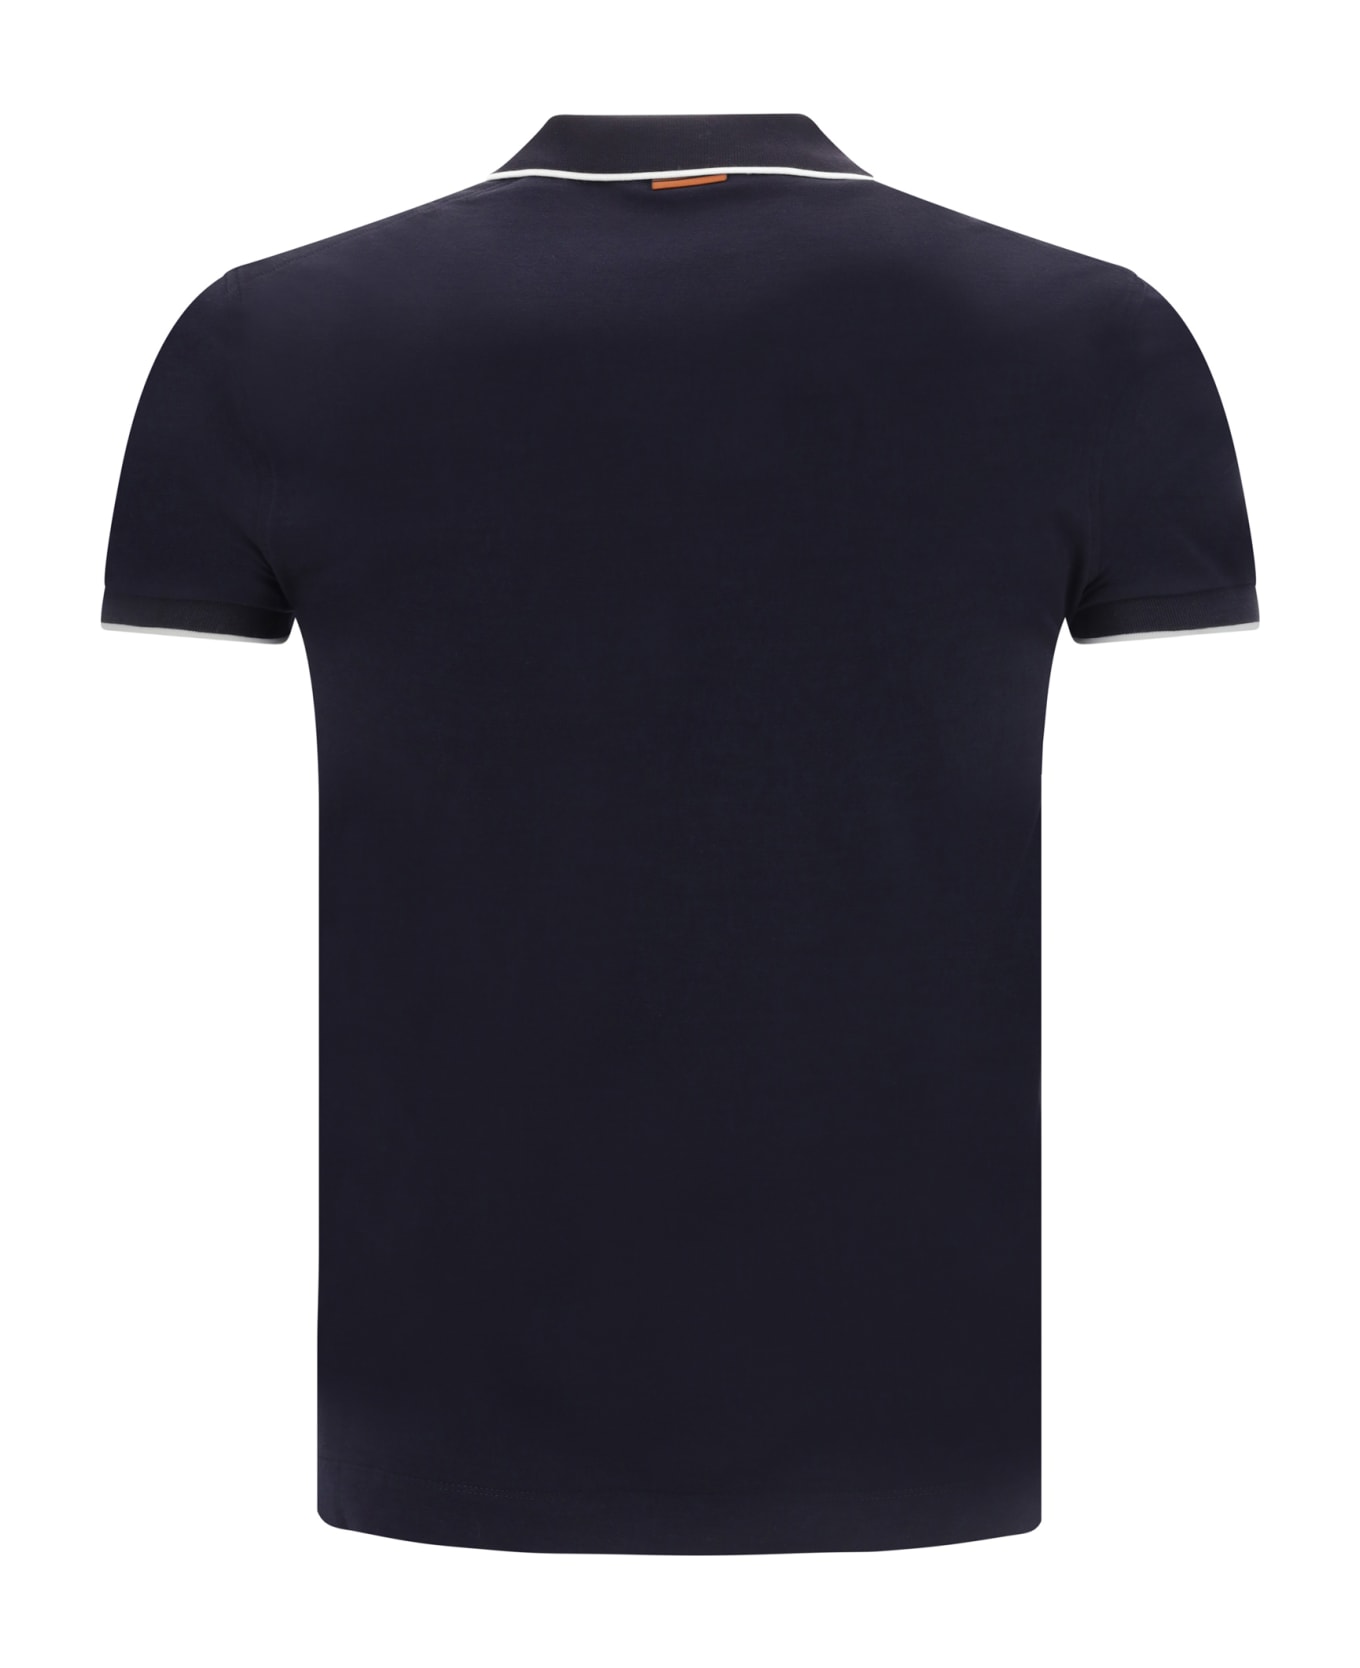 Zegna Polo Shirt - B09 ポロシャツ